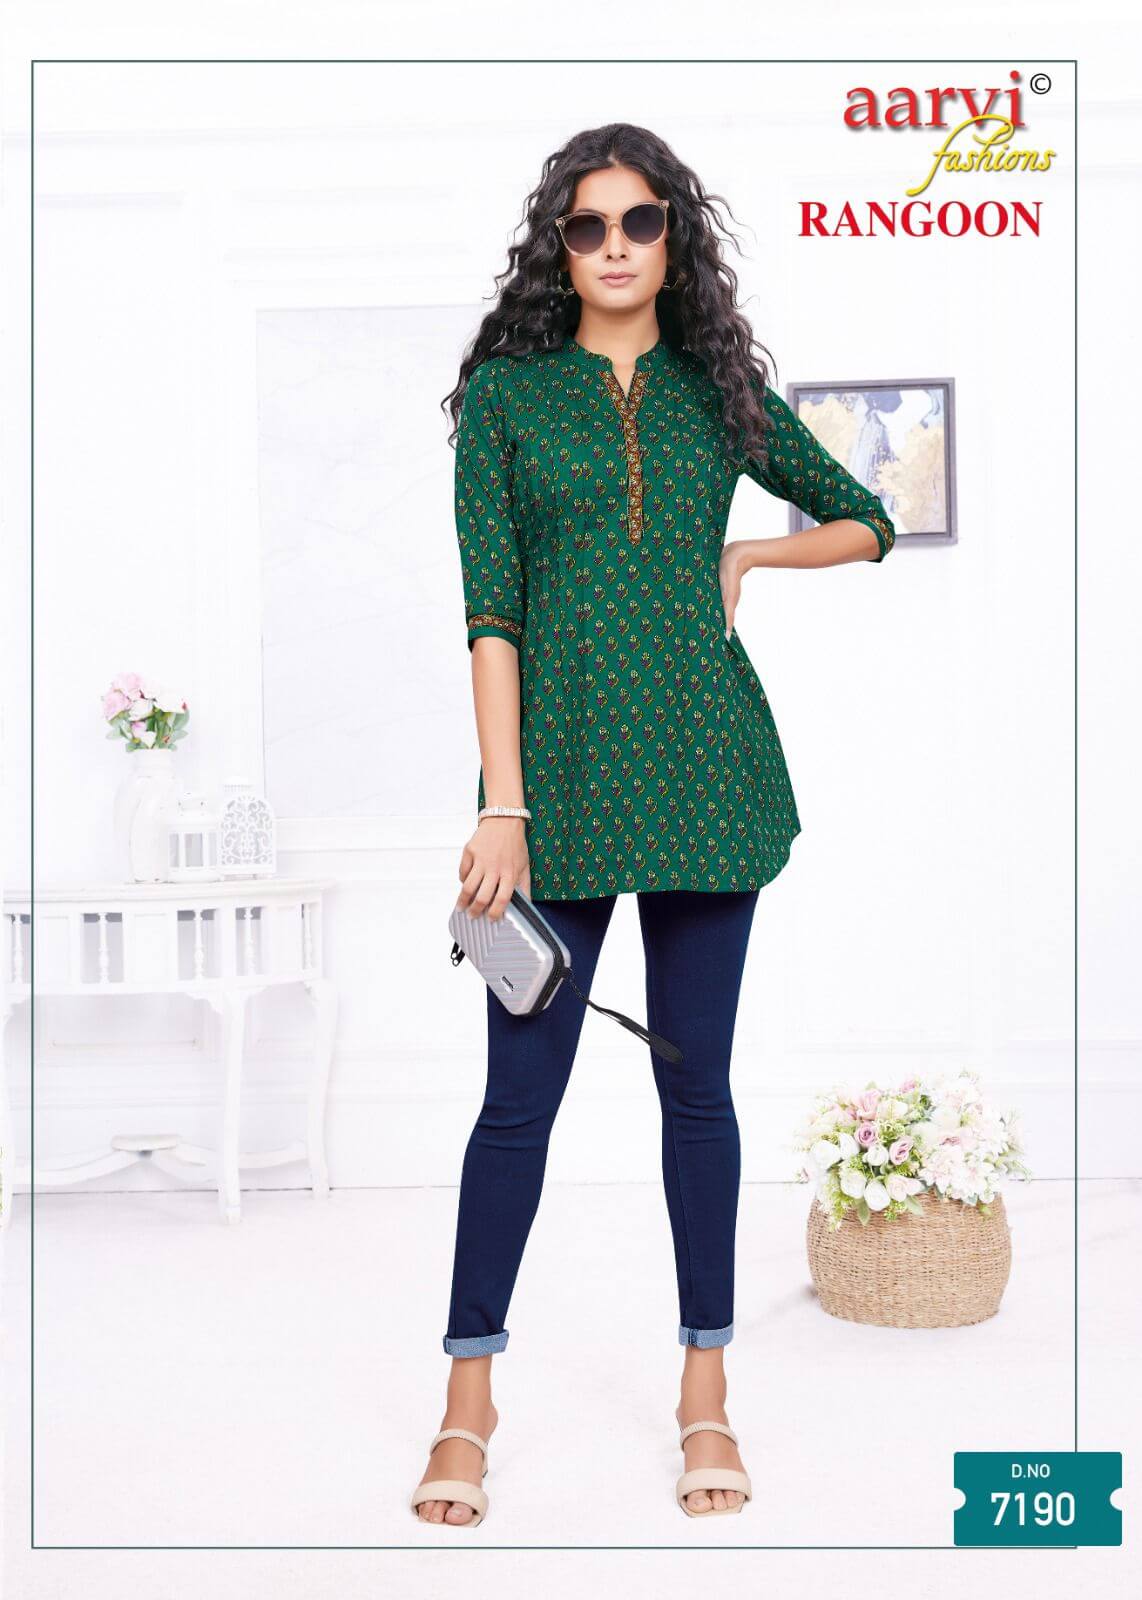 Aarvi Fashions Rangoon Ladies Short Tops Catalog collection 9